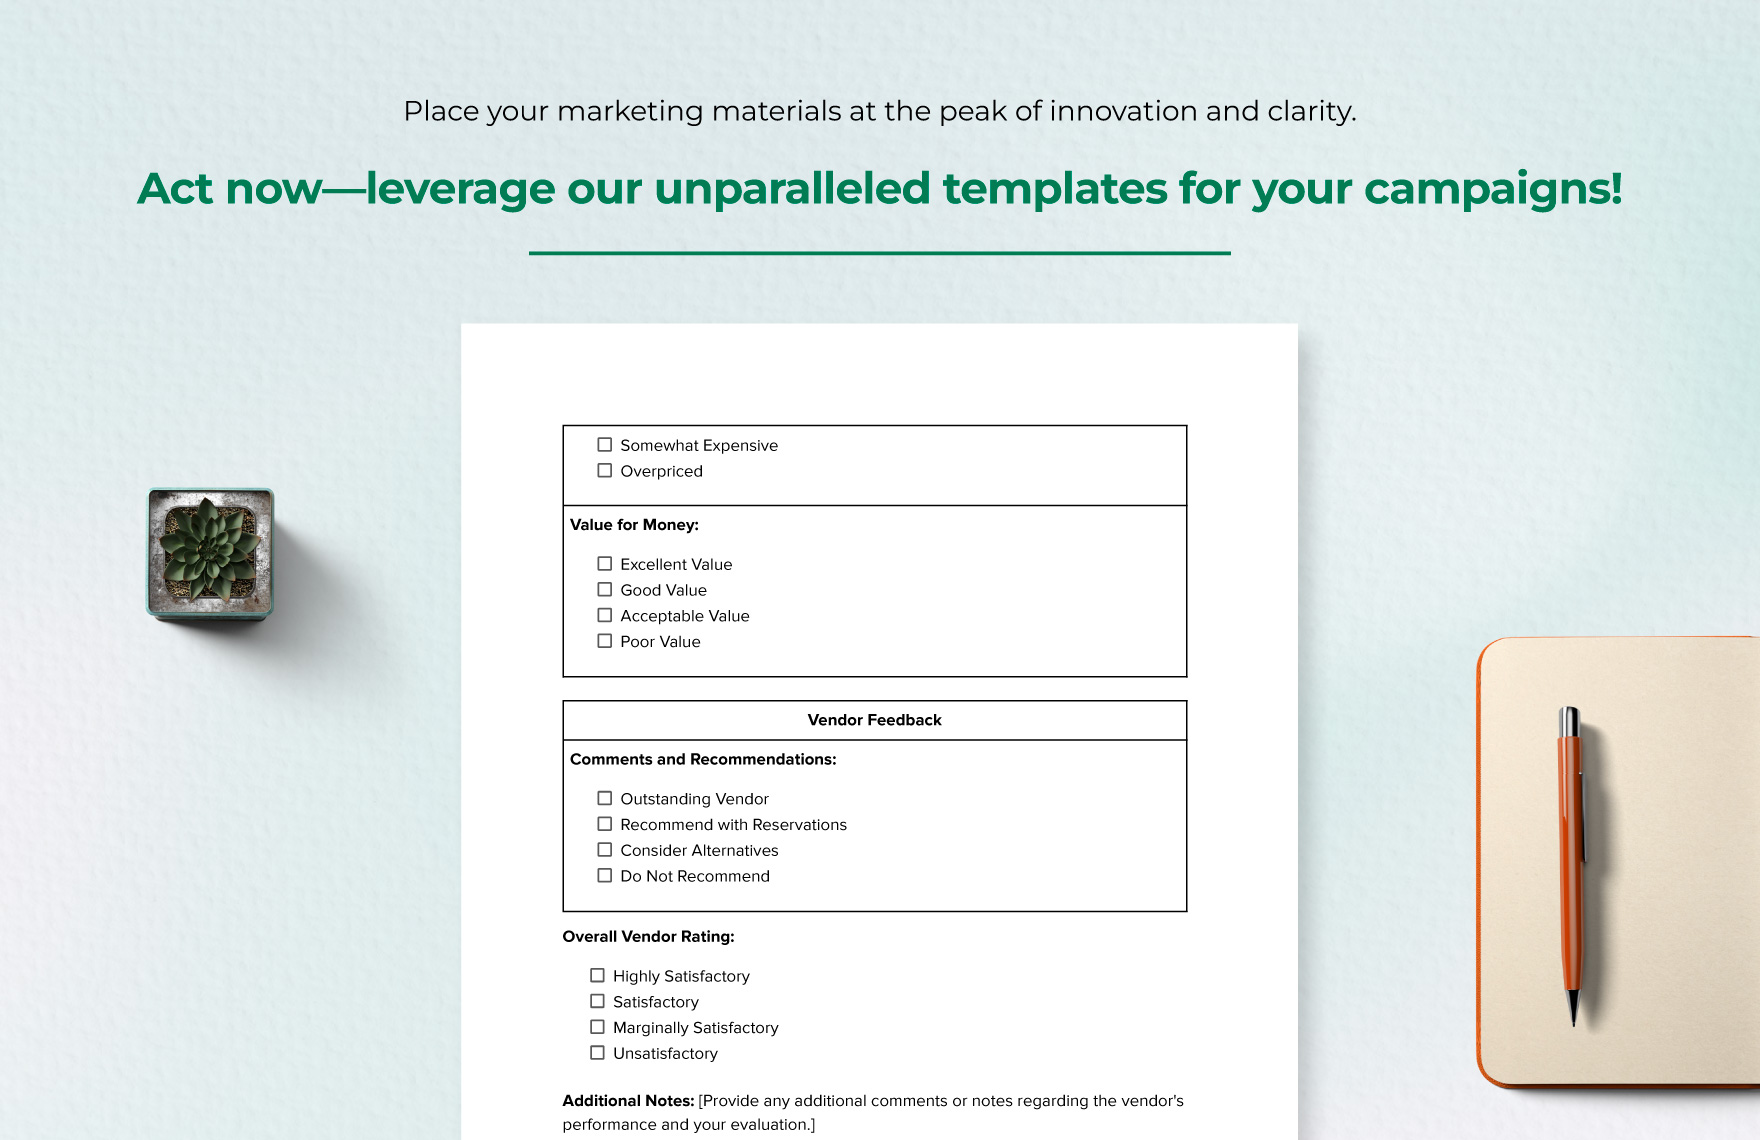 Marketing Vendor Evaluation Checklist Template